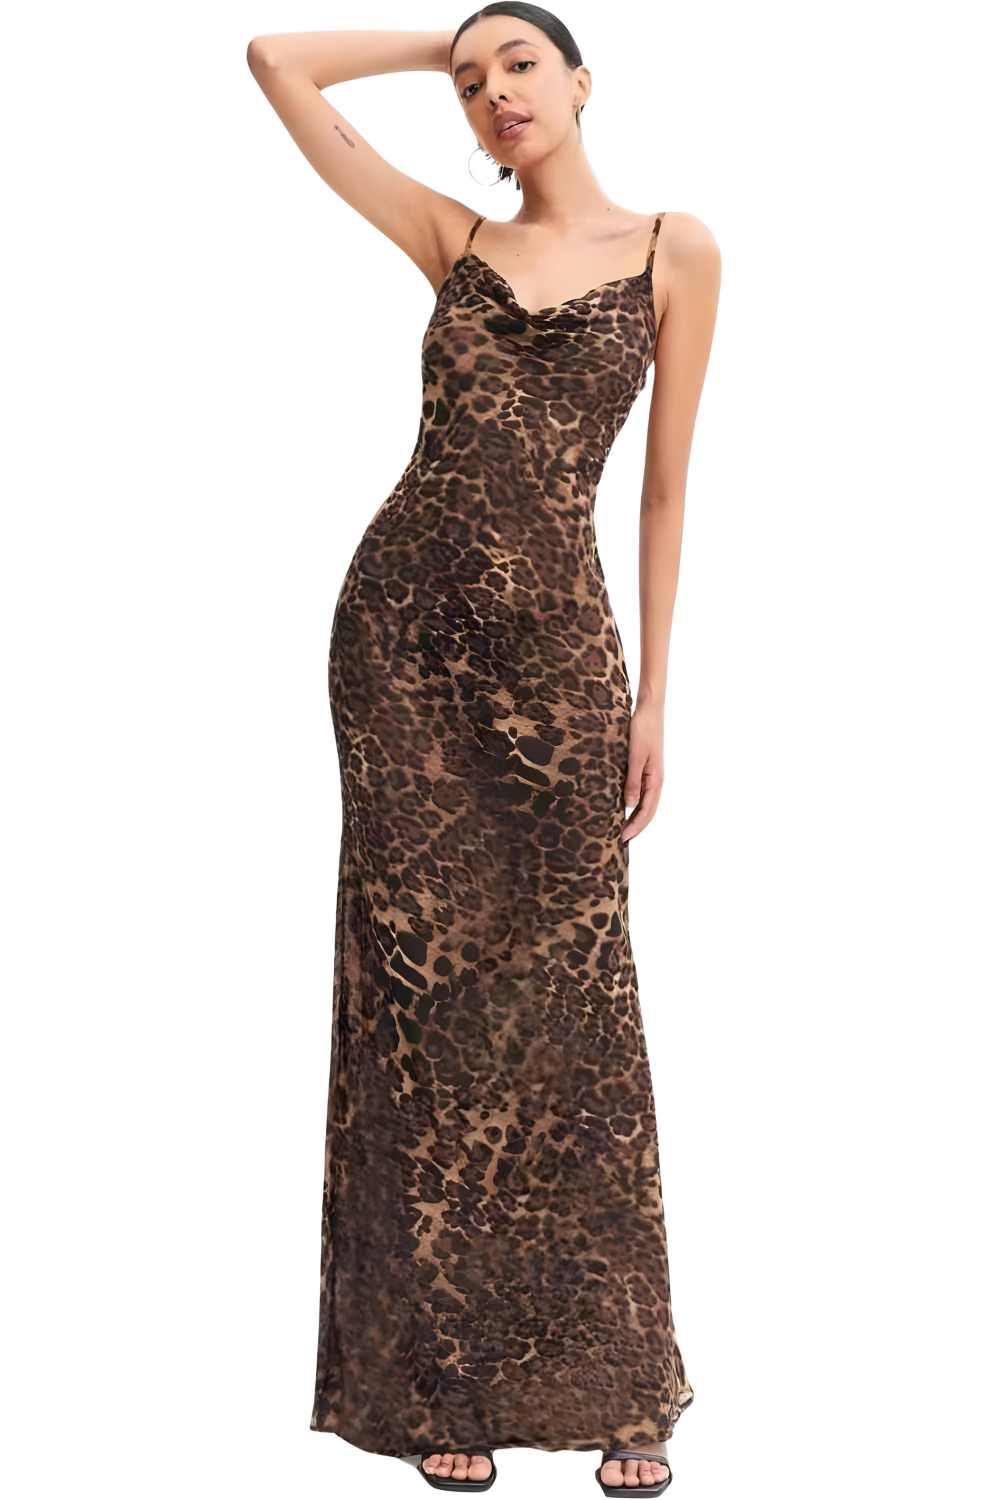 Women's Maxi Slip Dress Leopard Print  - A.A.Y FASHION